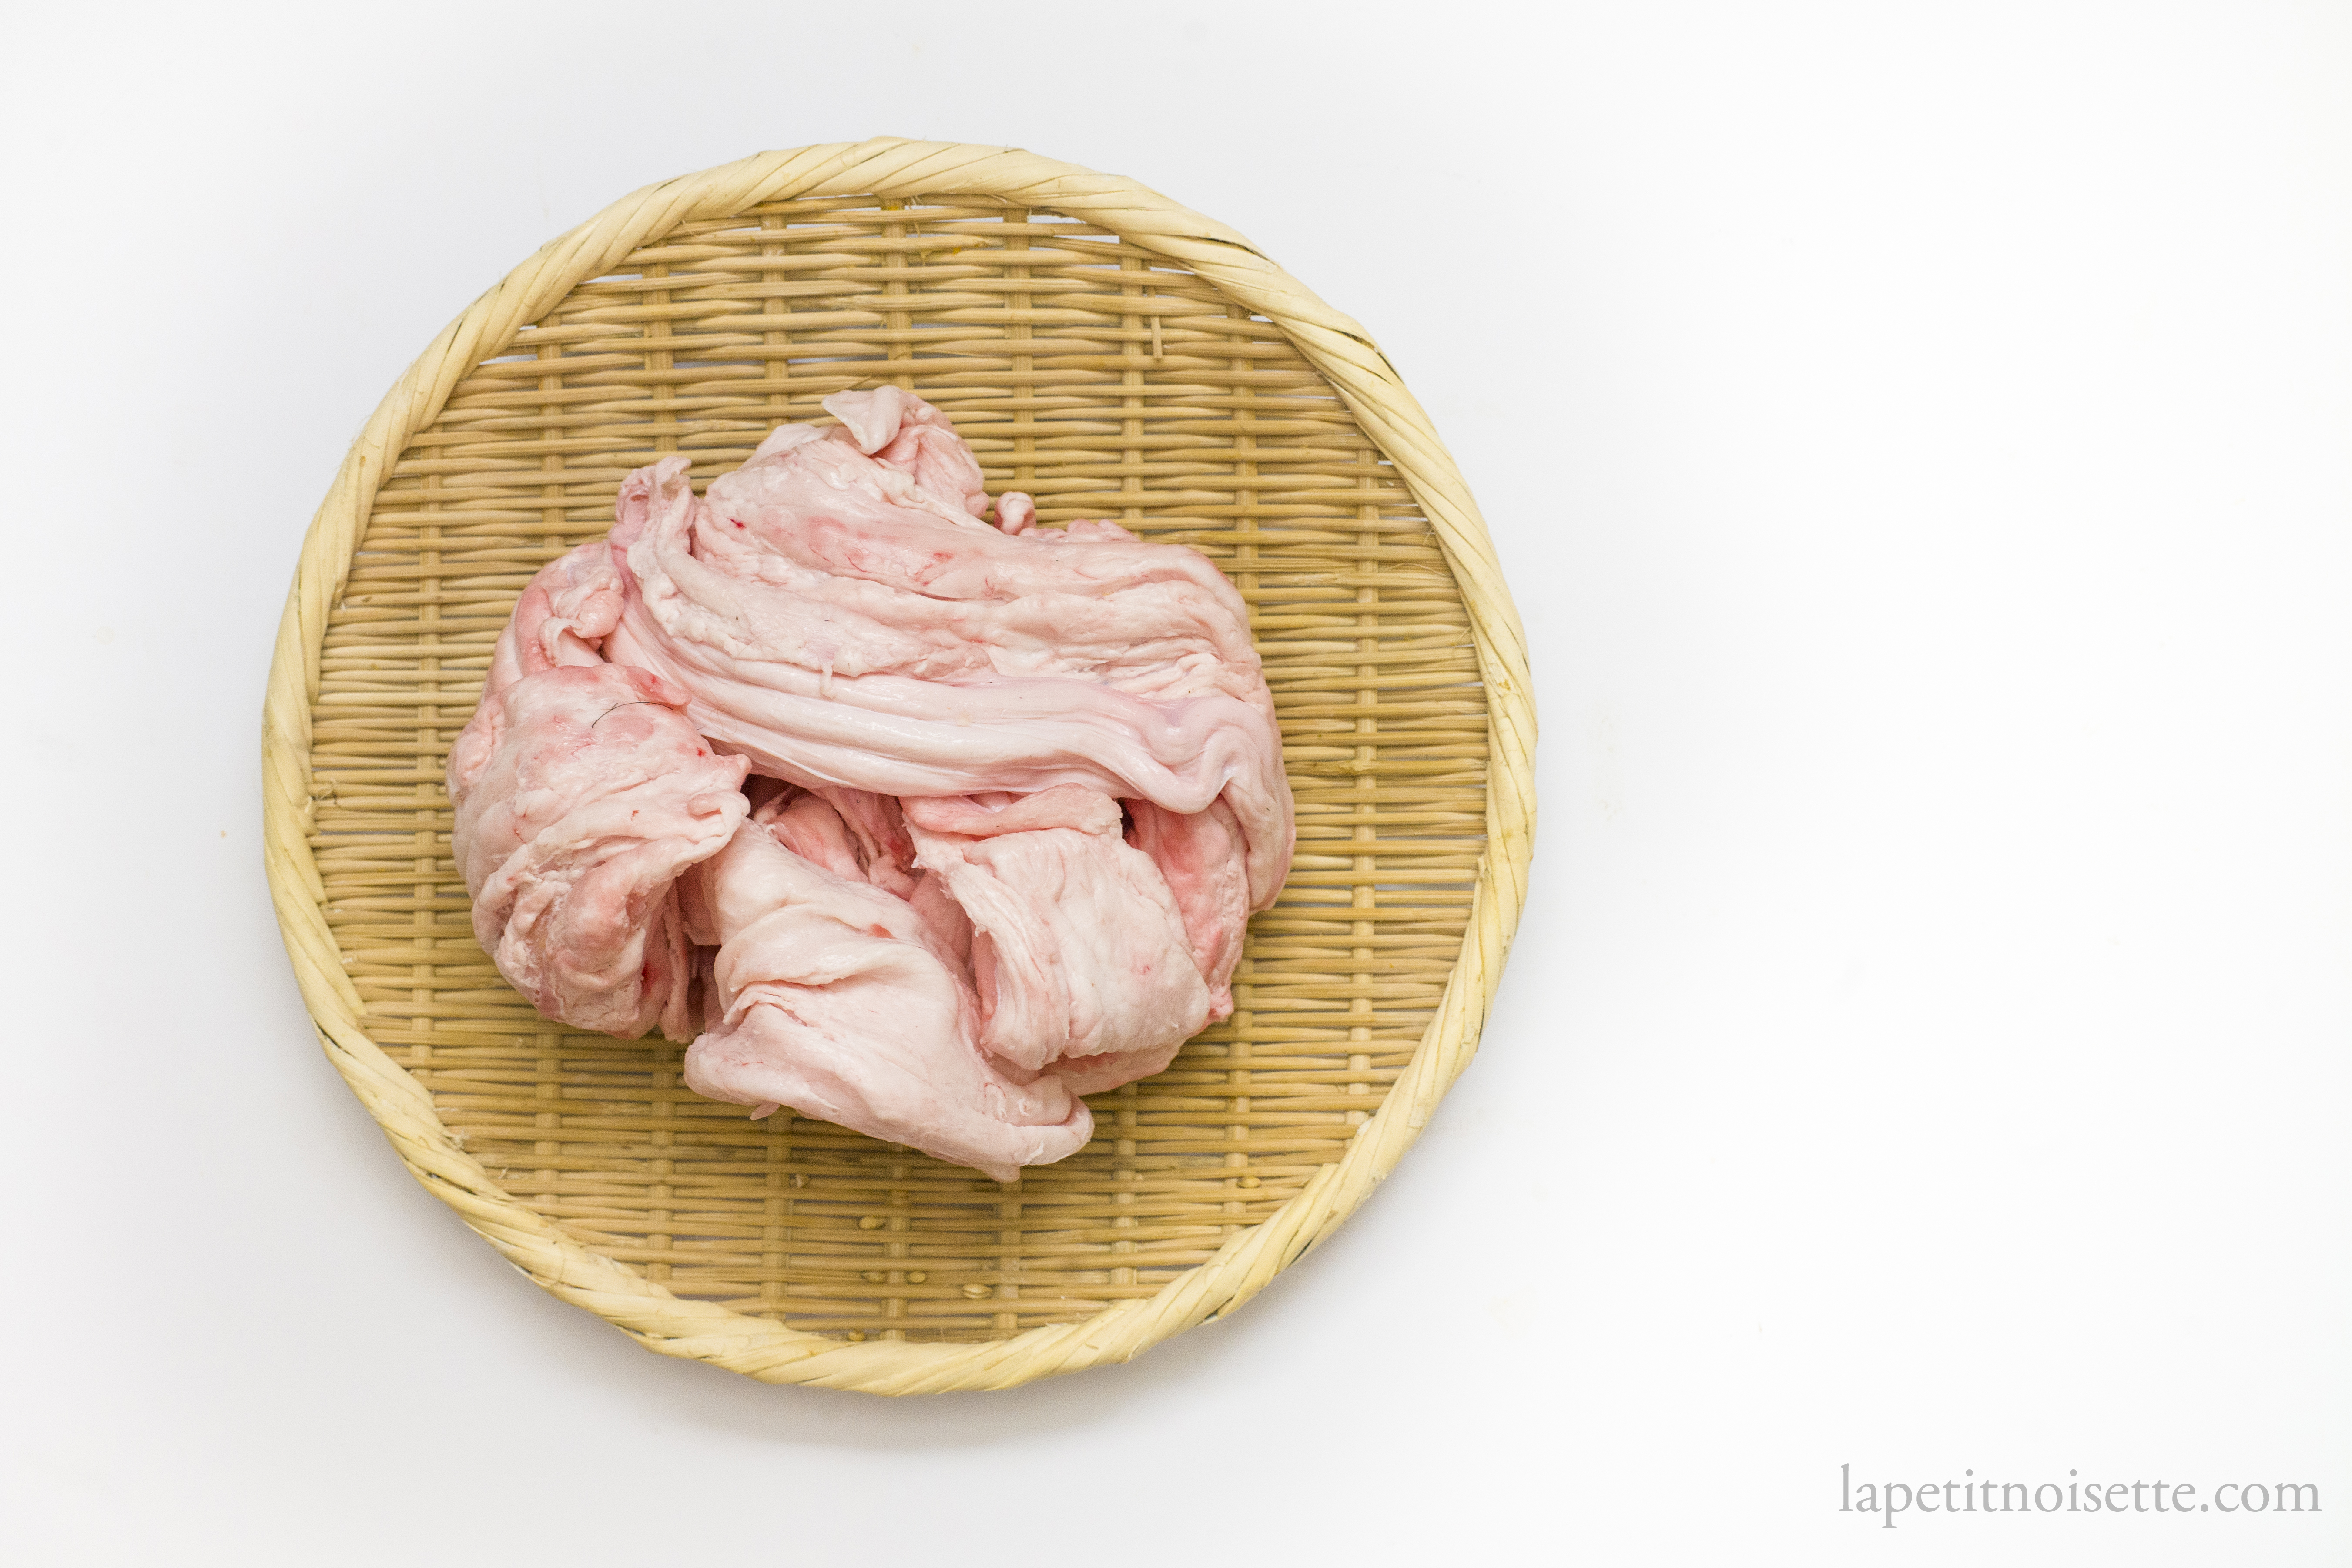 Pork leaf lard used to fry tonkatsu at high end restaurants.